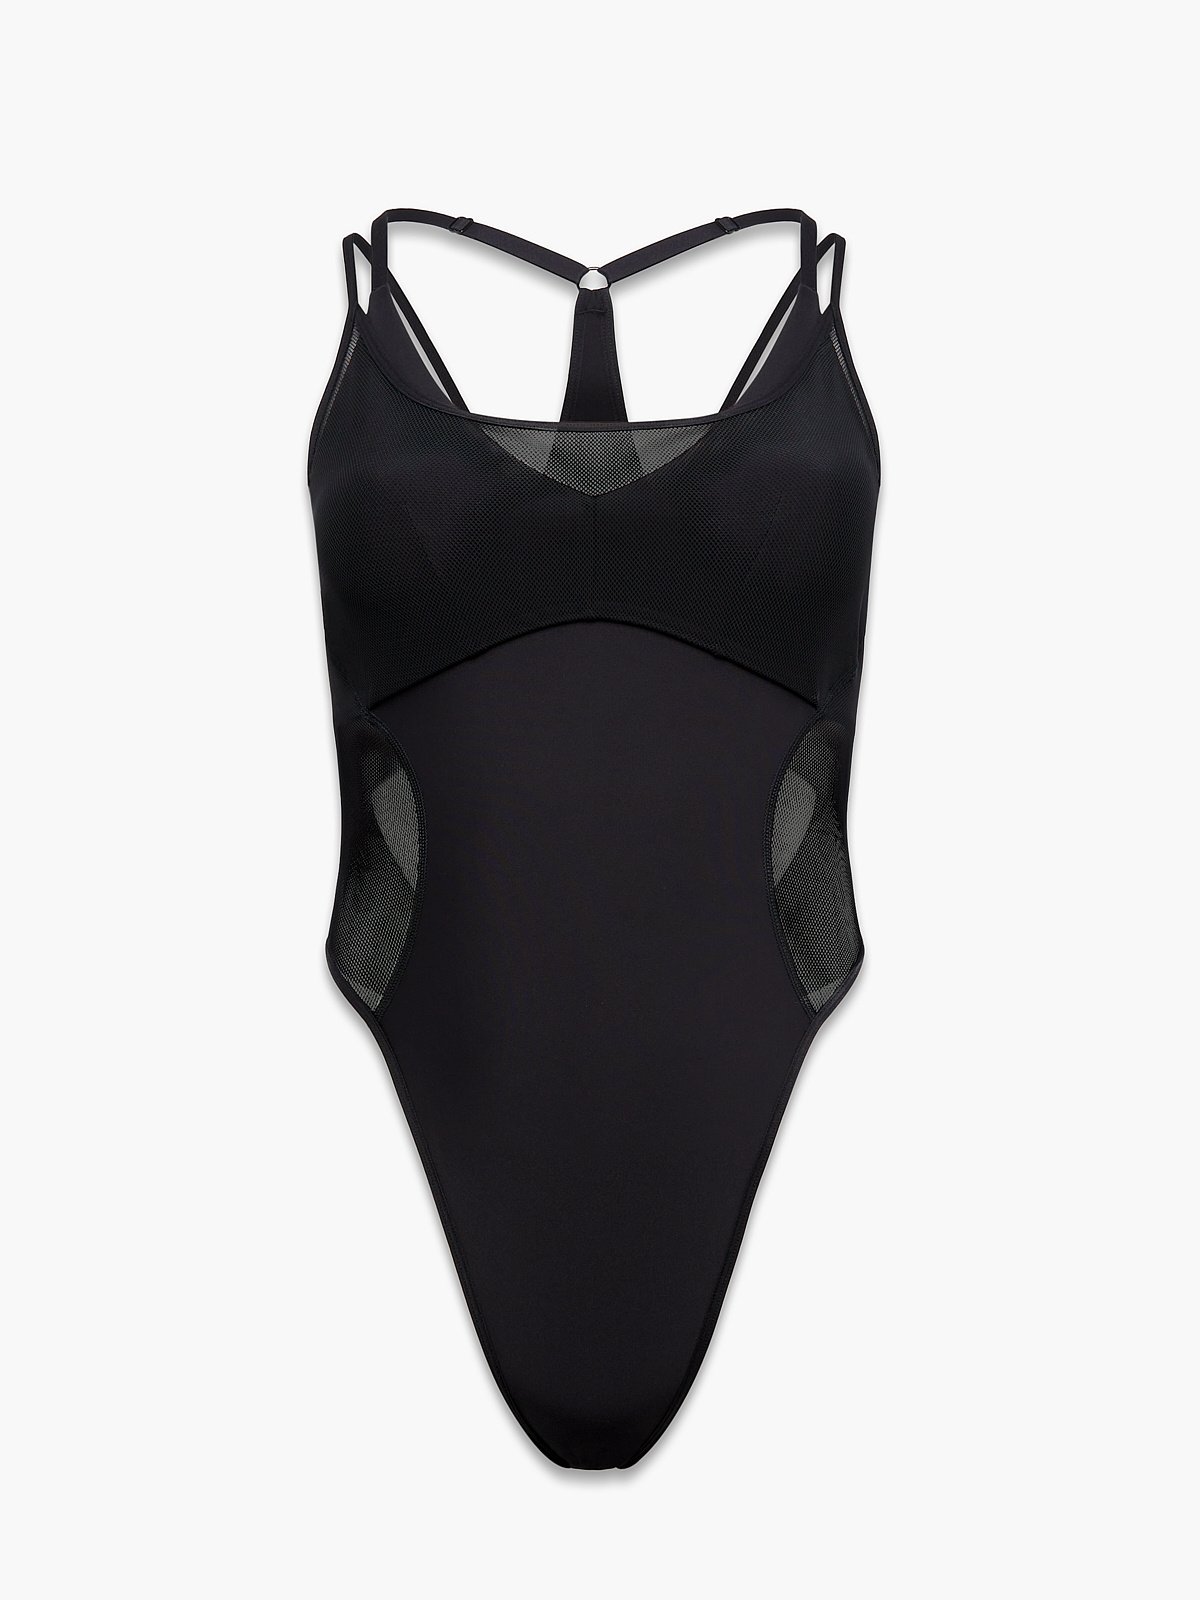 FENTY | Bodysuit X SAVAGE Black 1-On-1 in